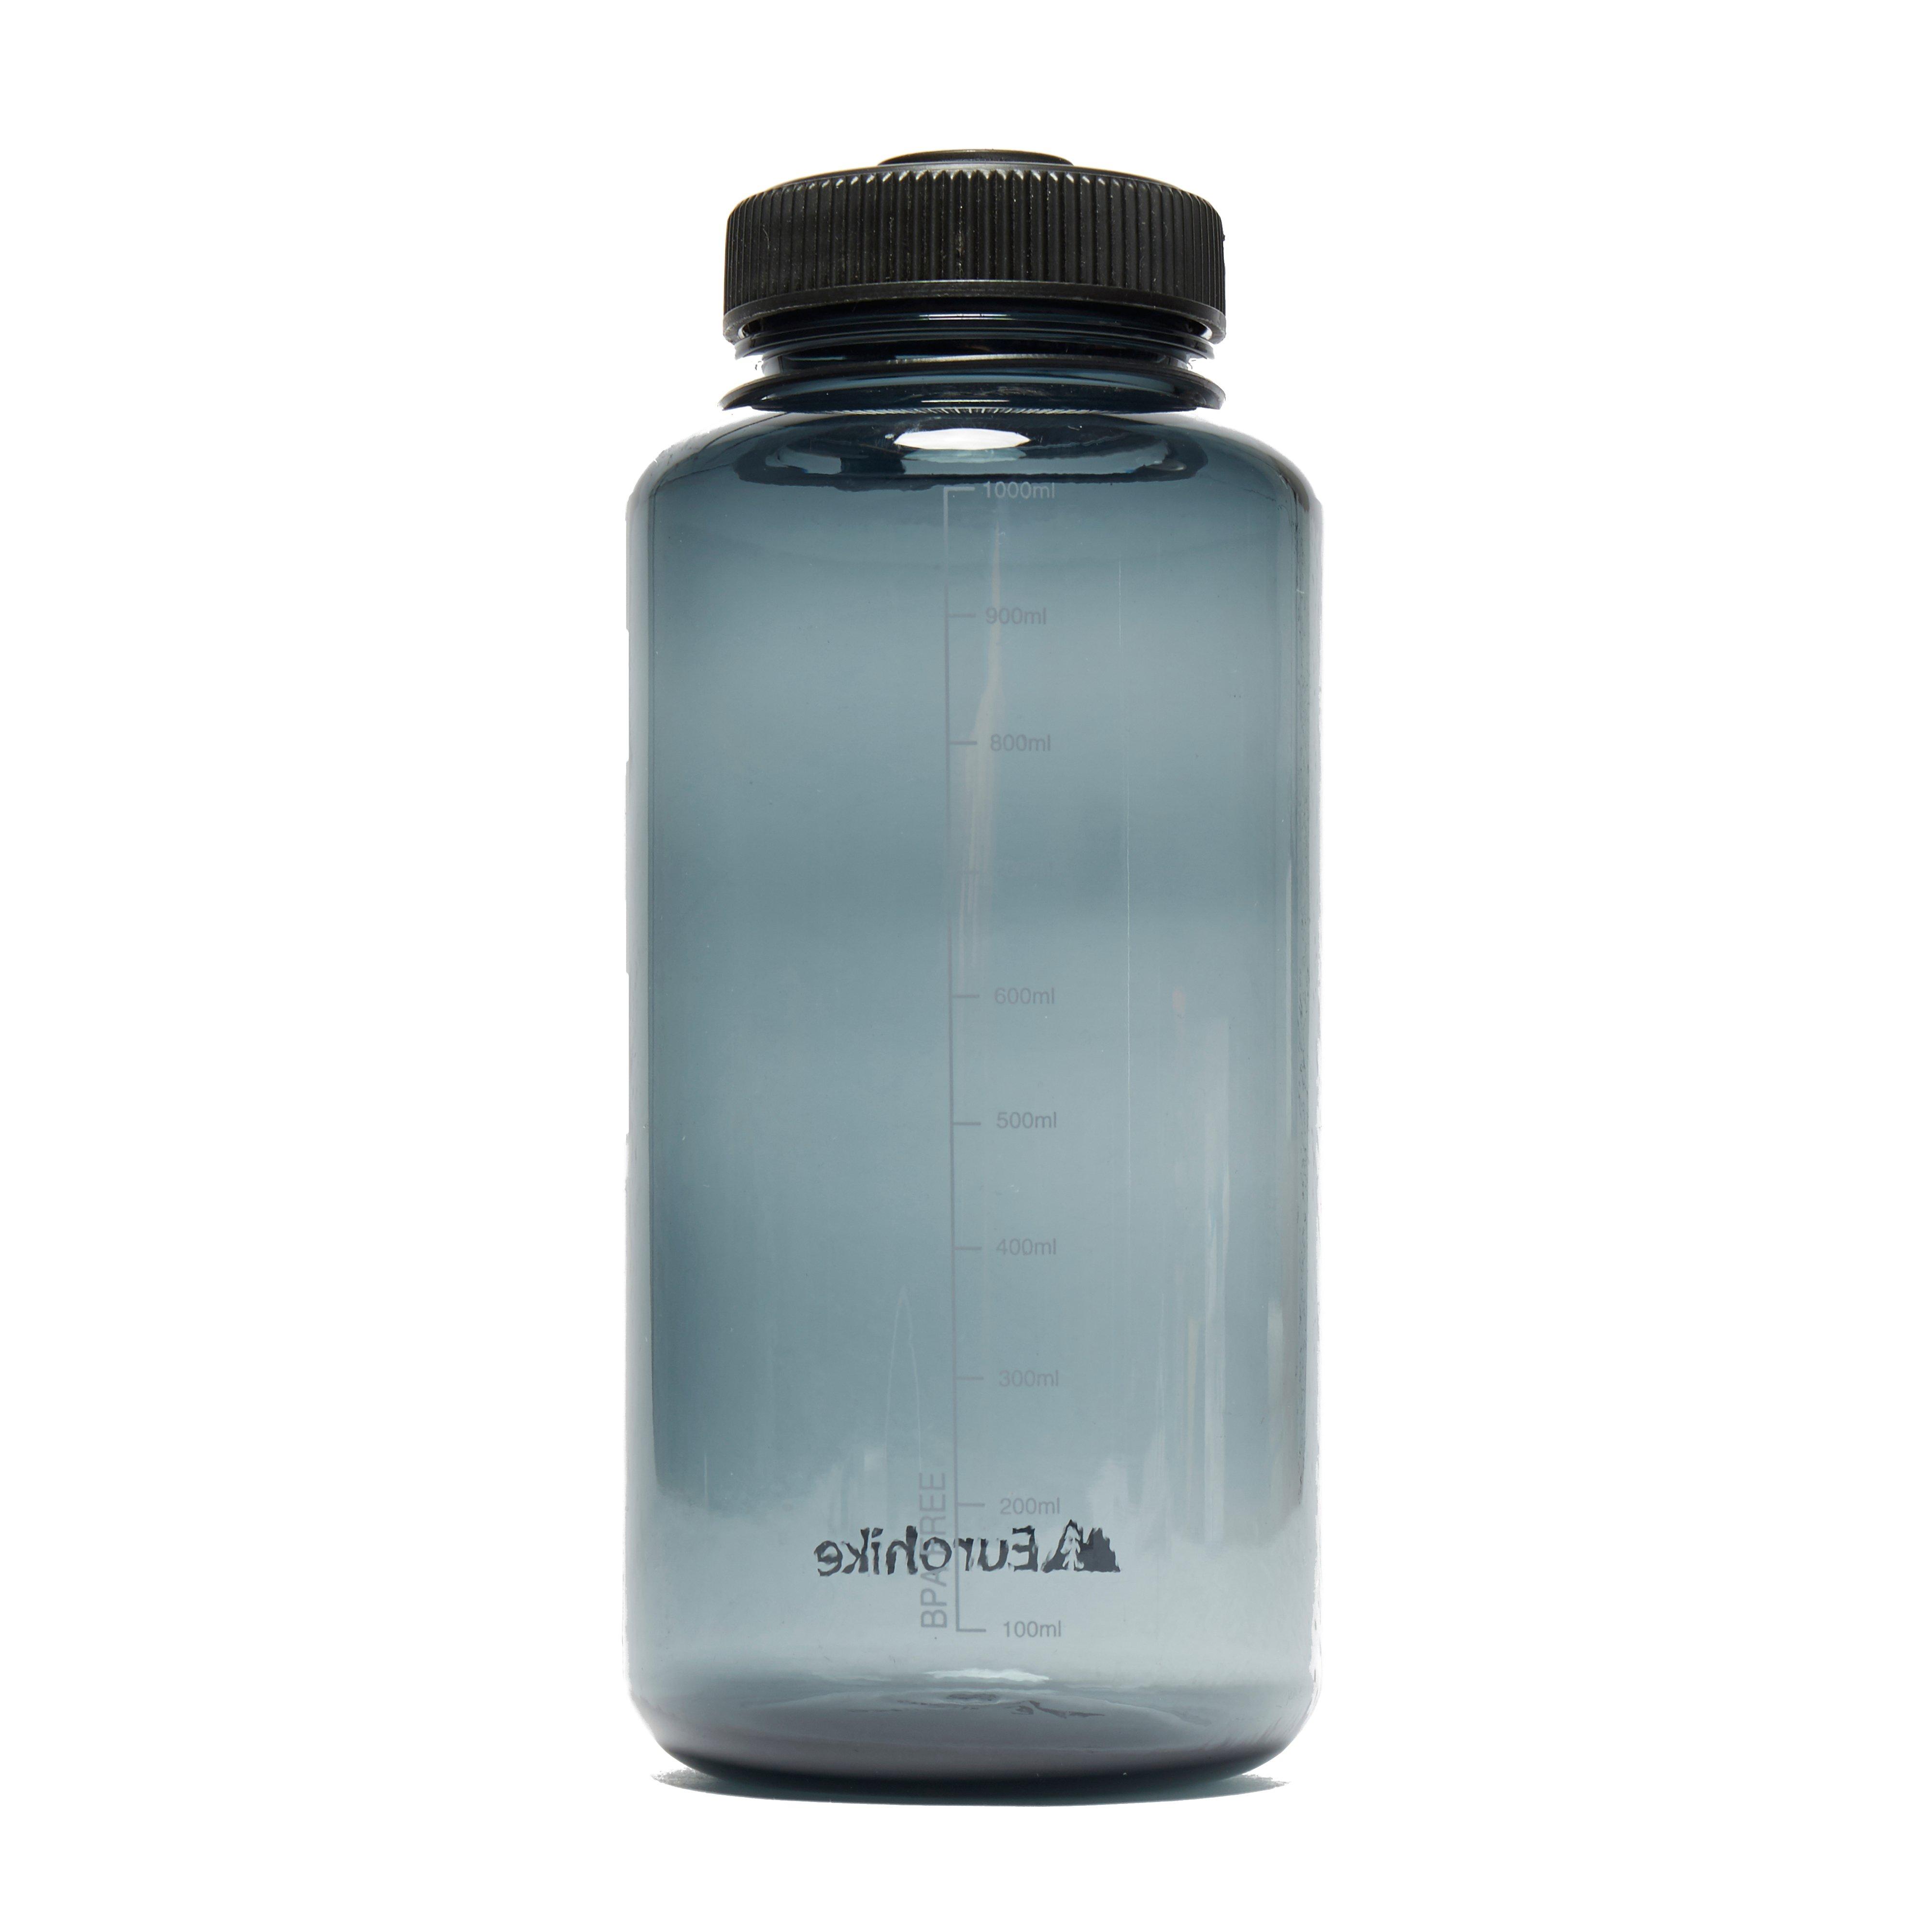 Eurohike Hydro 1L Water Bottle Review